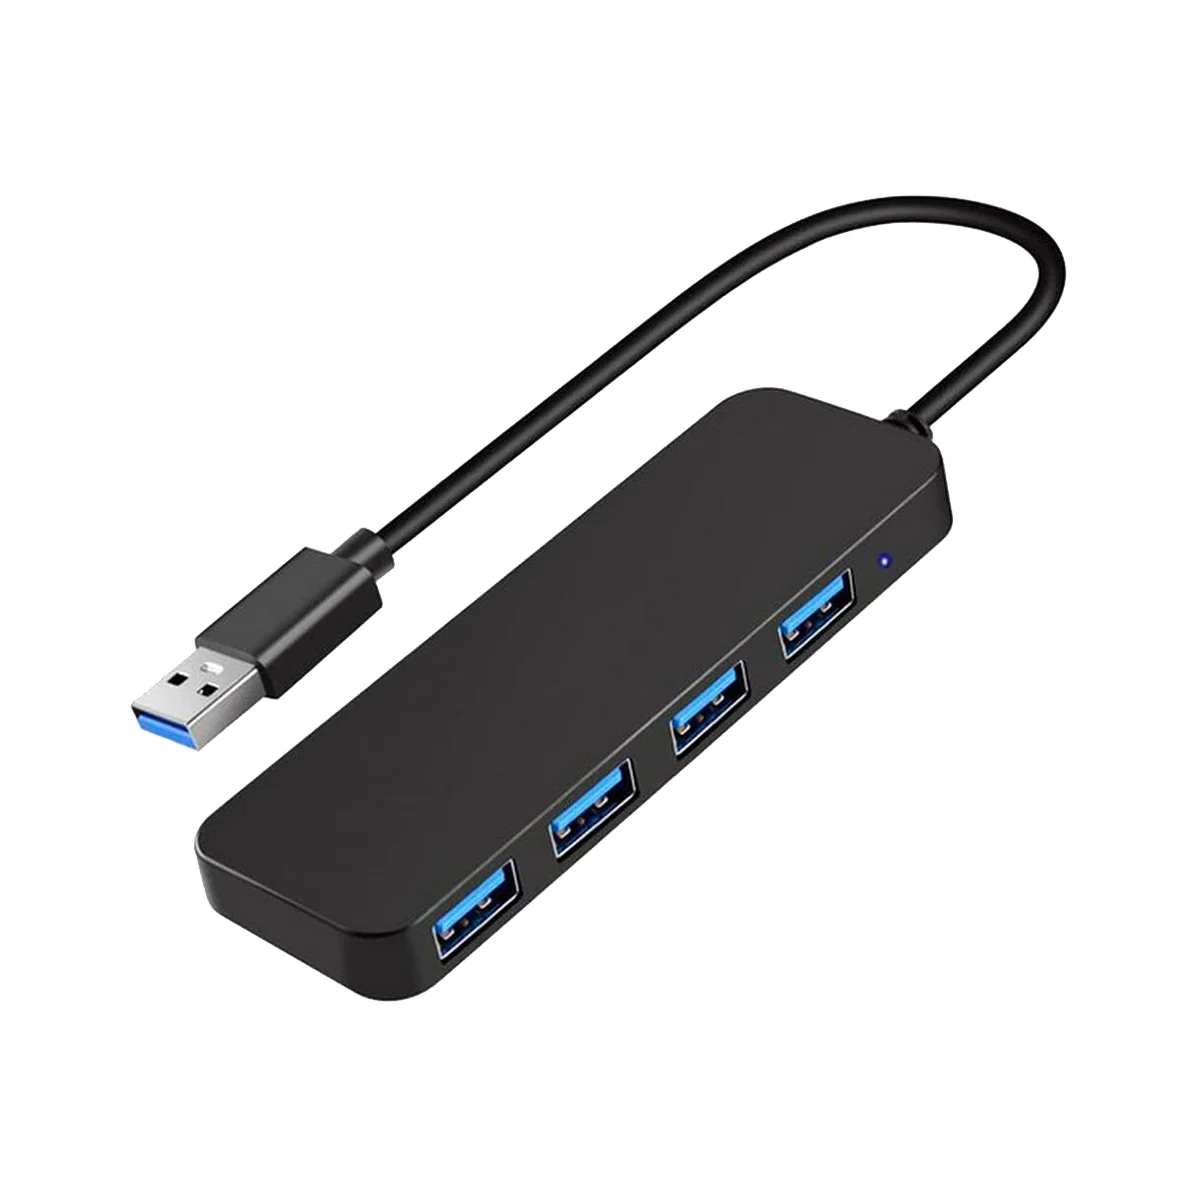 

4 Ports USB Hub, USB 3.0 Hub USB Splitter USB Expander for Laptop, Flash Drive, HDD, Console, Printer, Camera,Keyboard